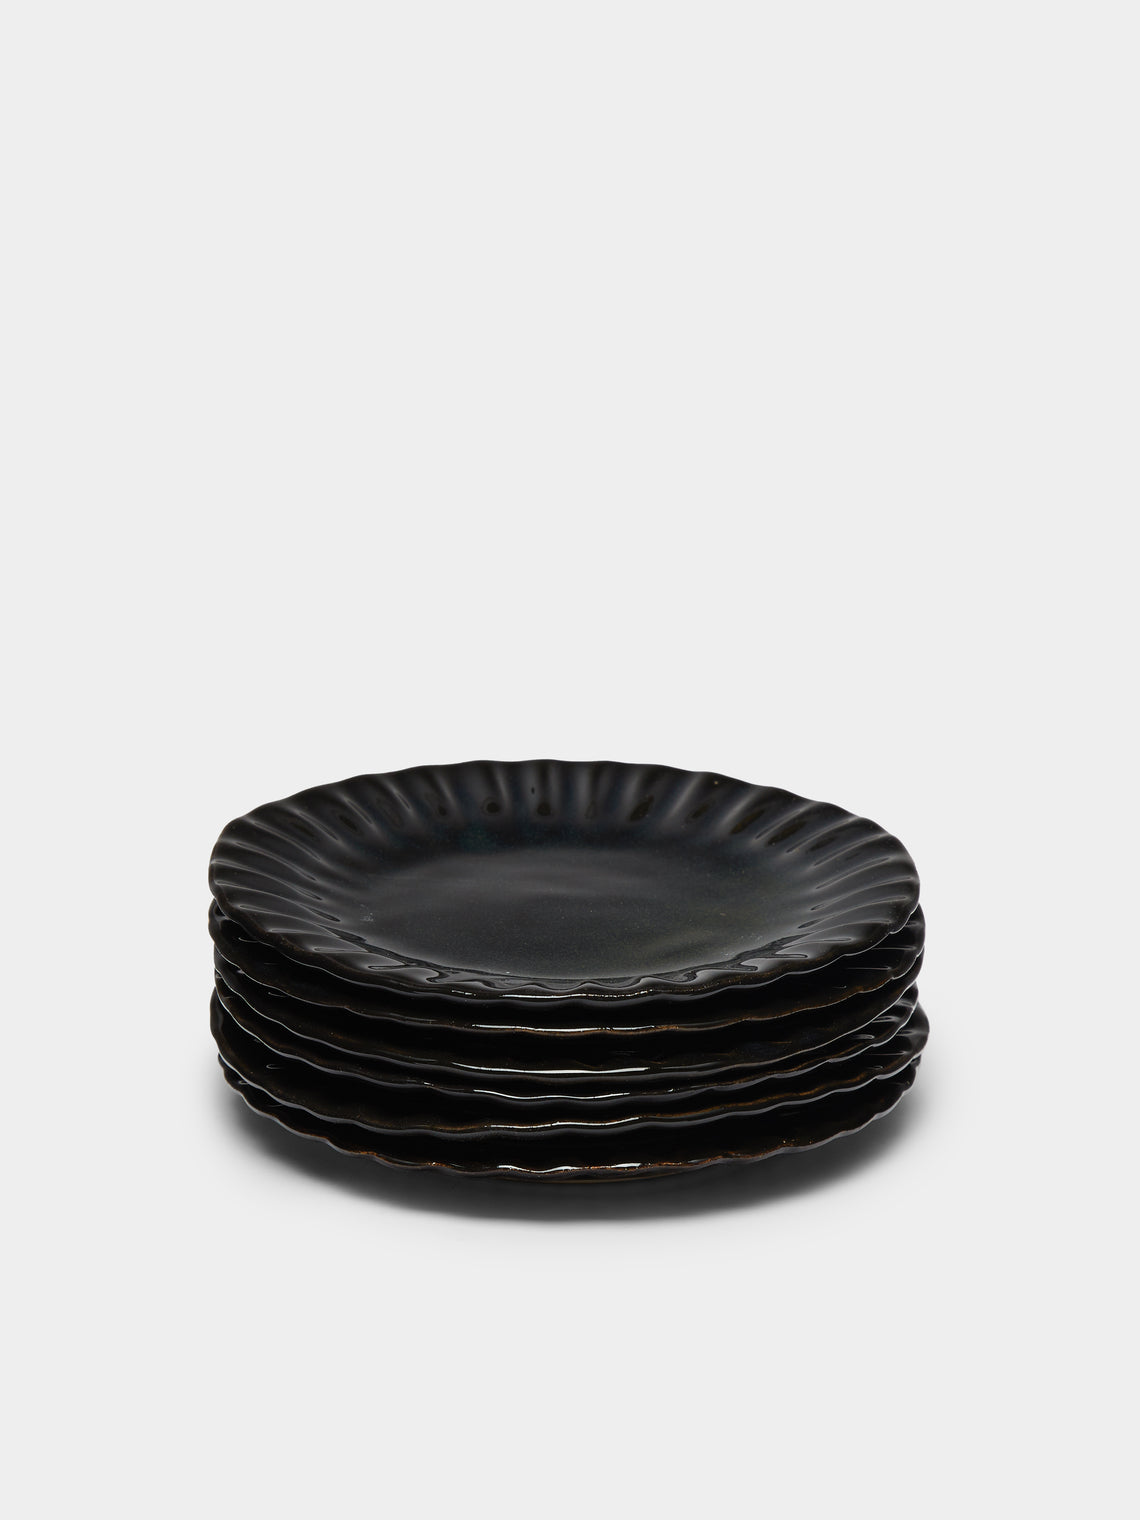 Mervyn Gers Ceramics - 'Paper' Side Plates (Set of 6) - Black - ABASK